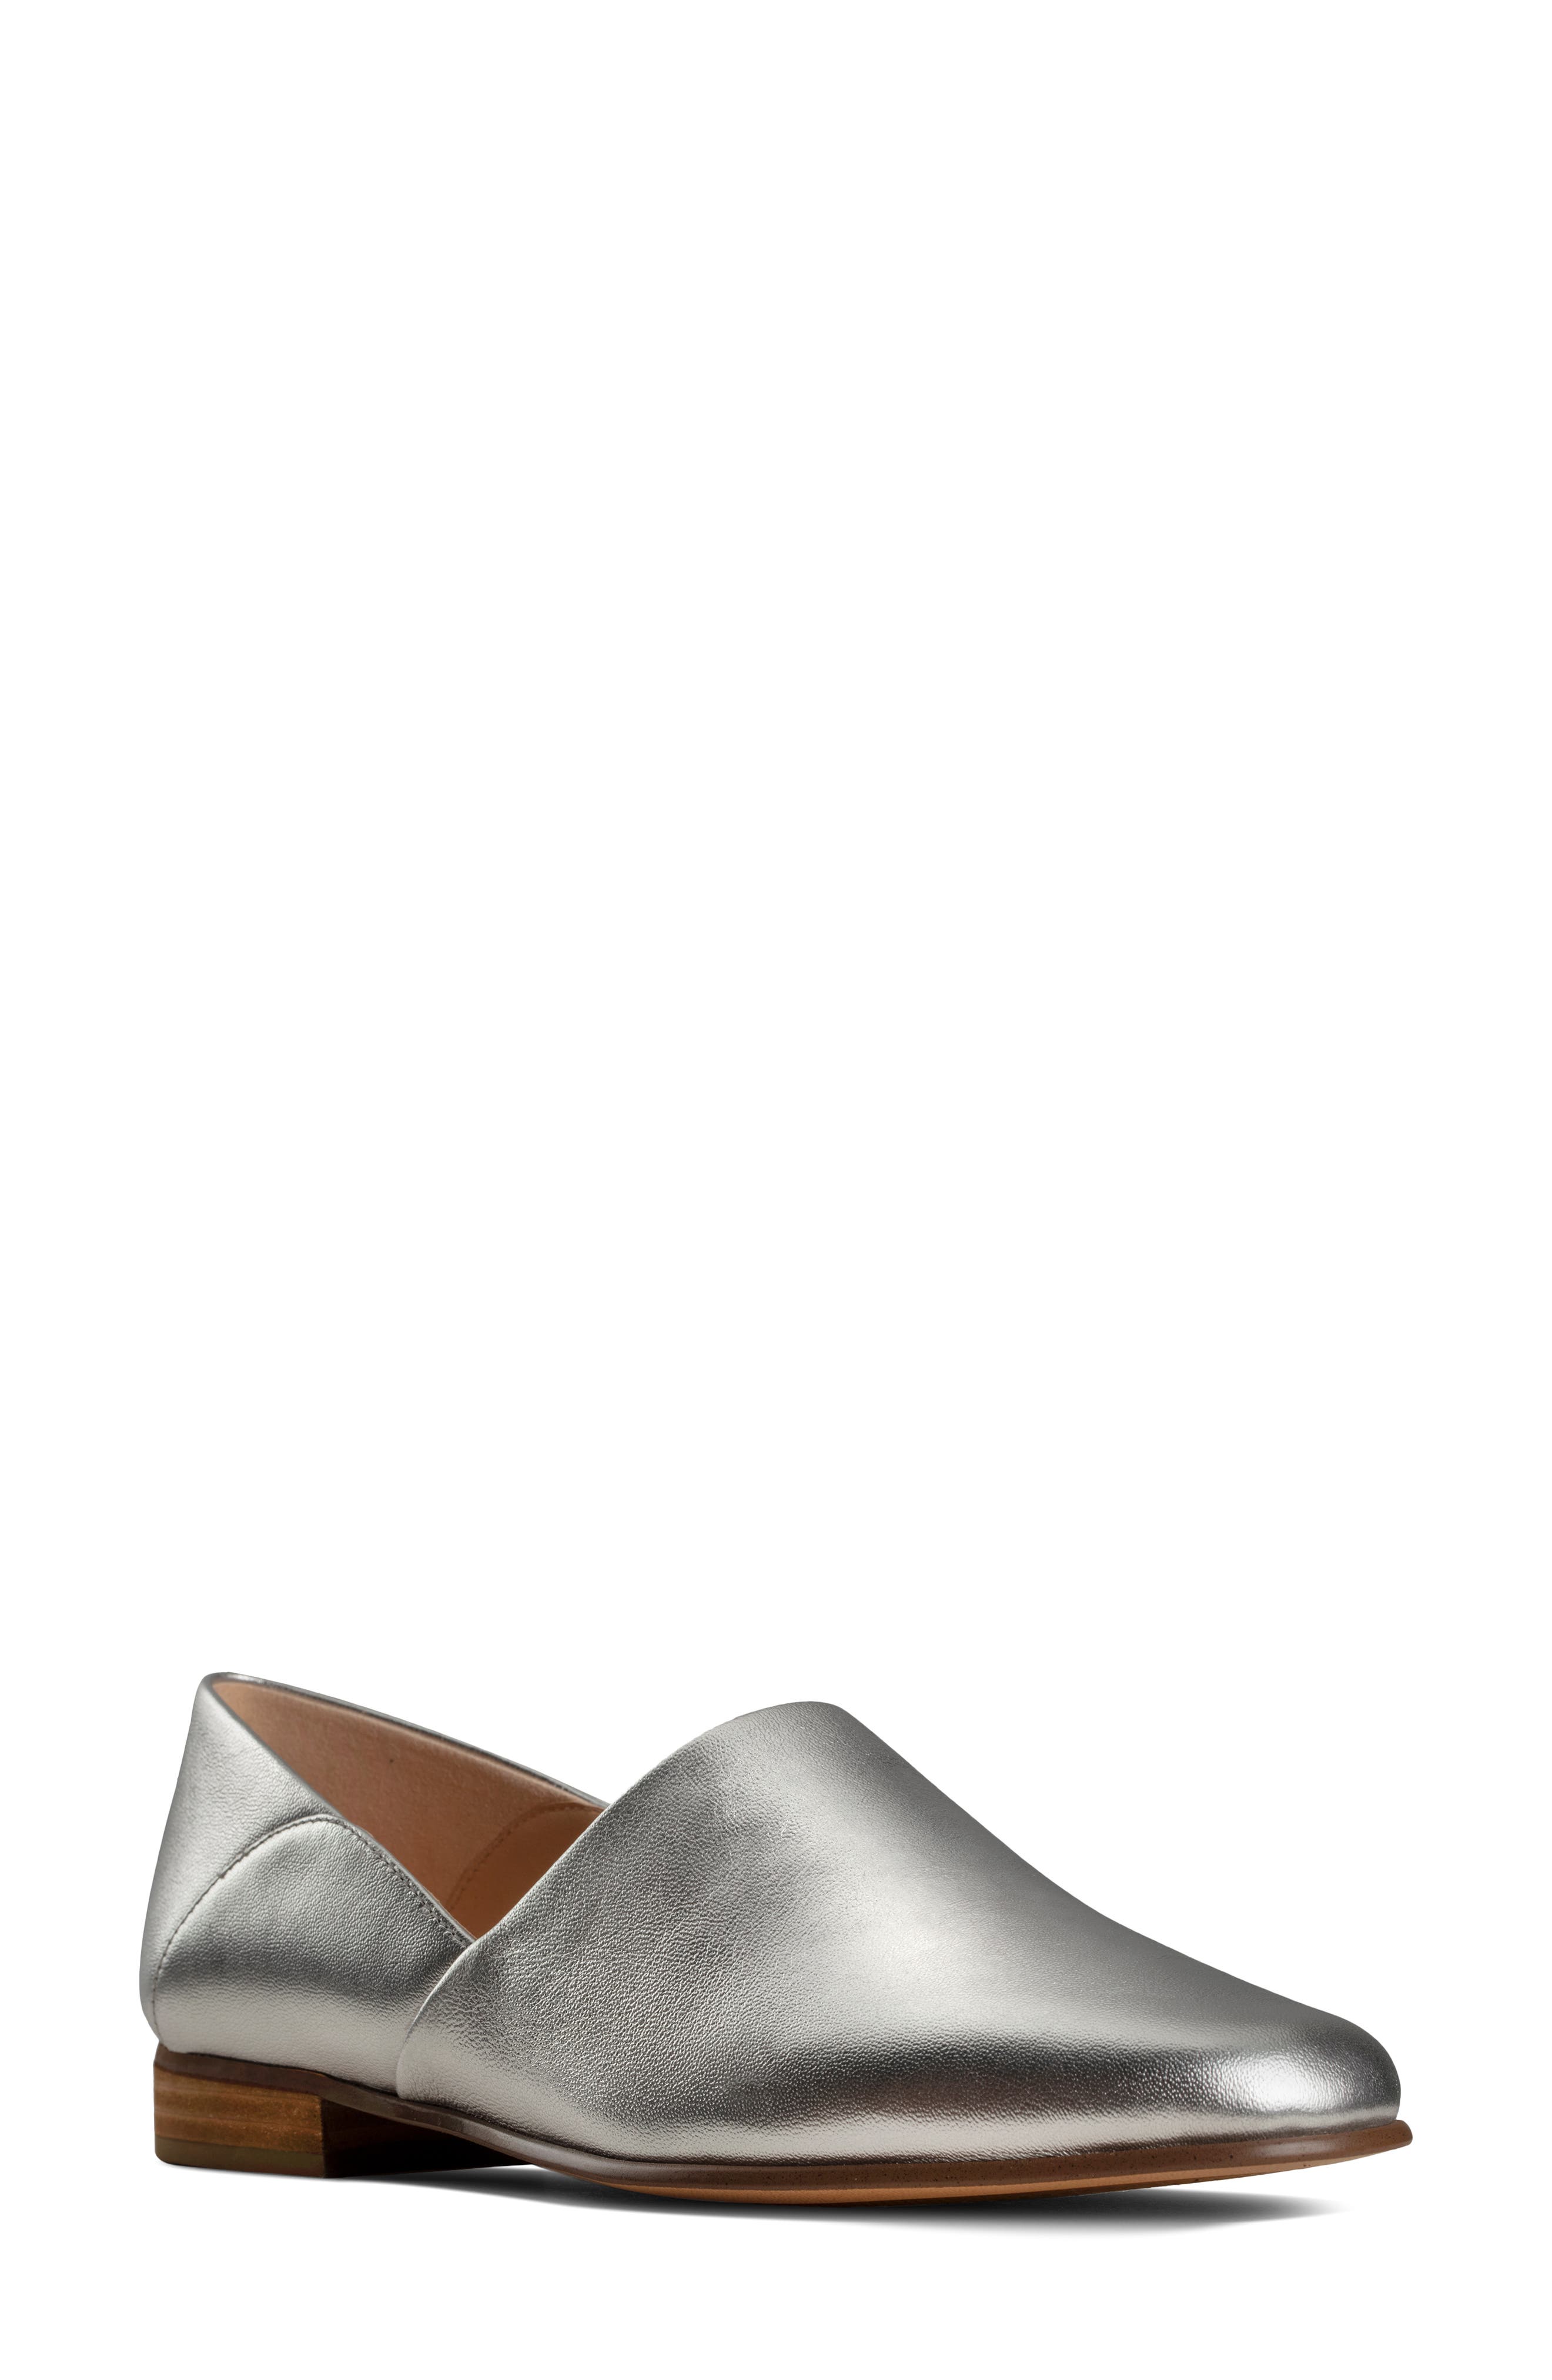 clarks metallic shoes